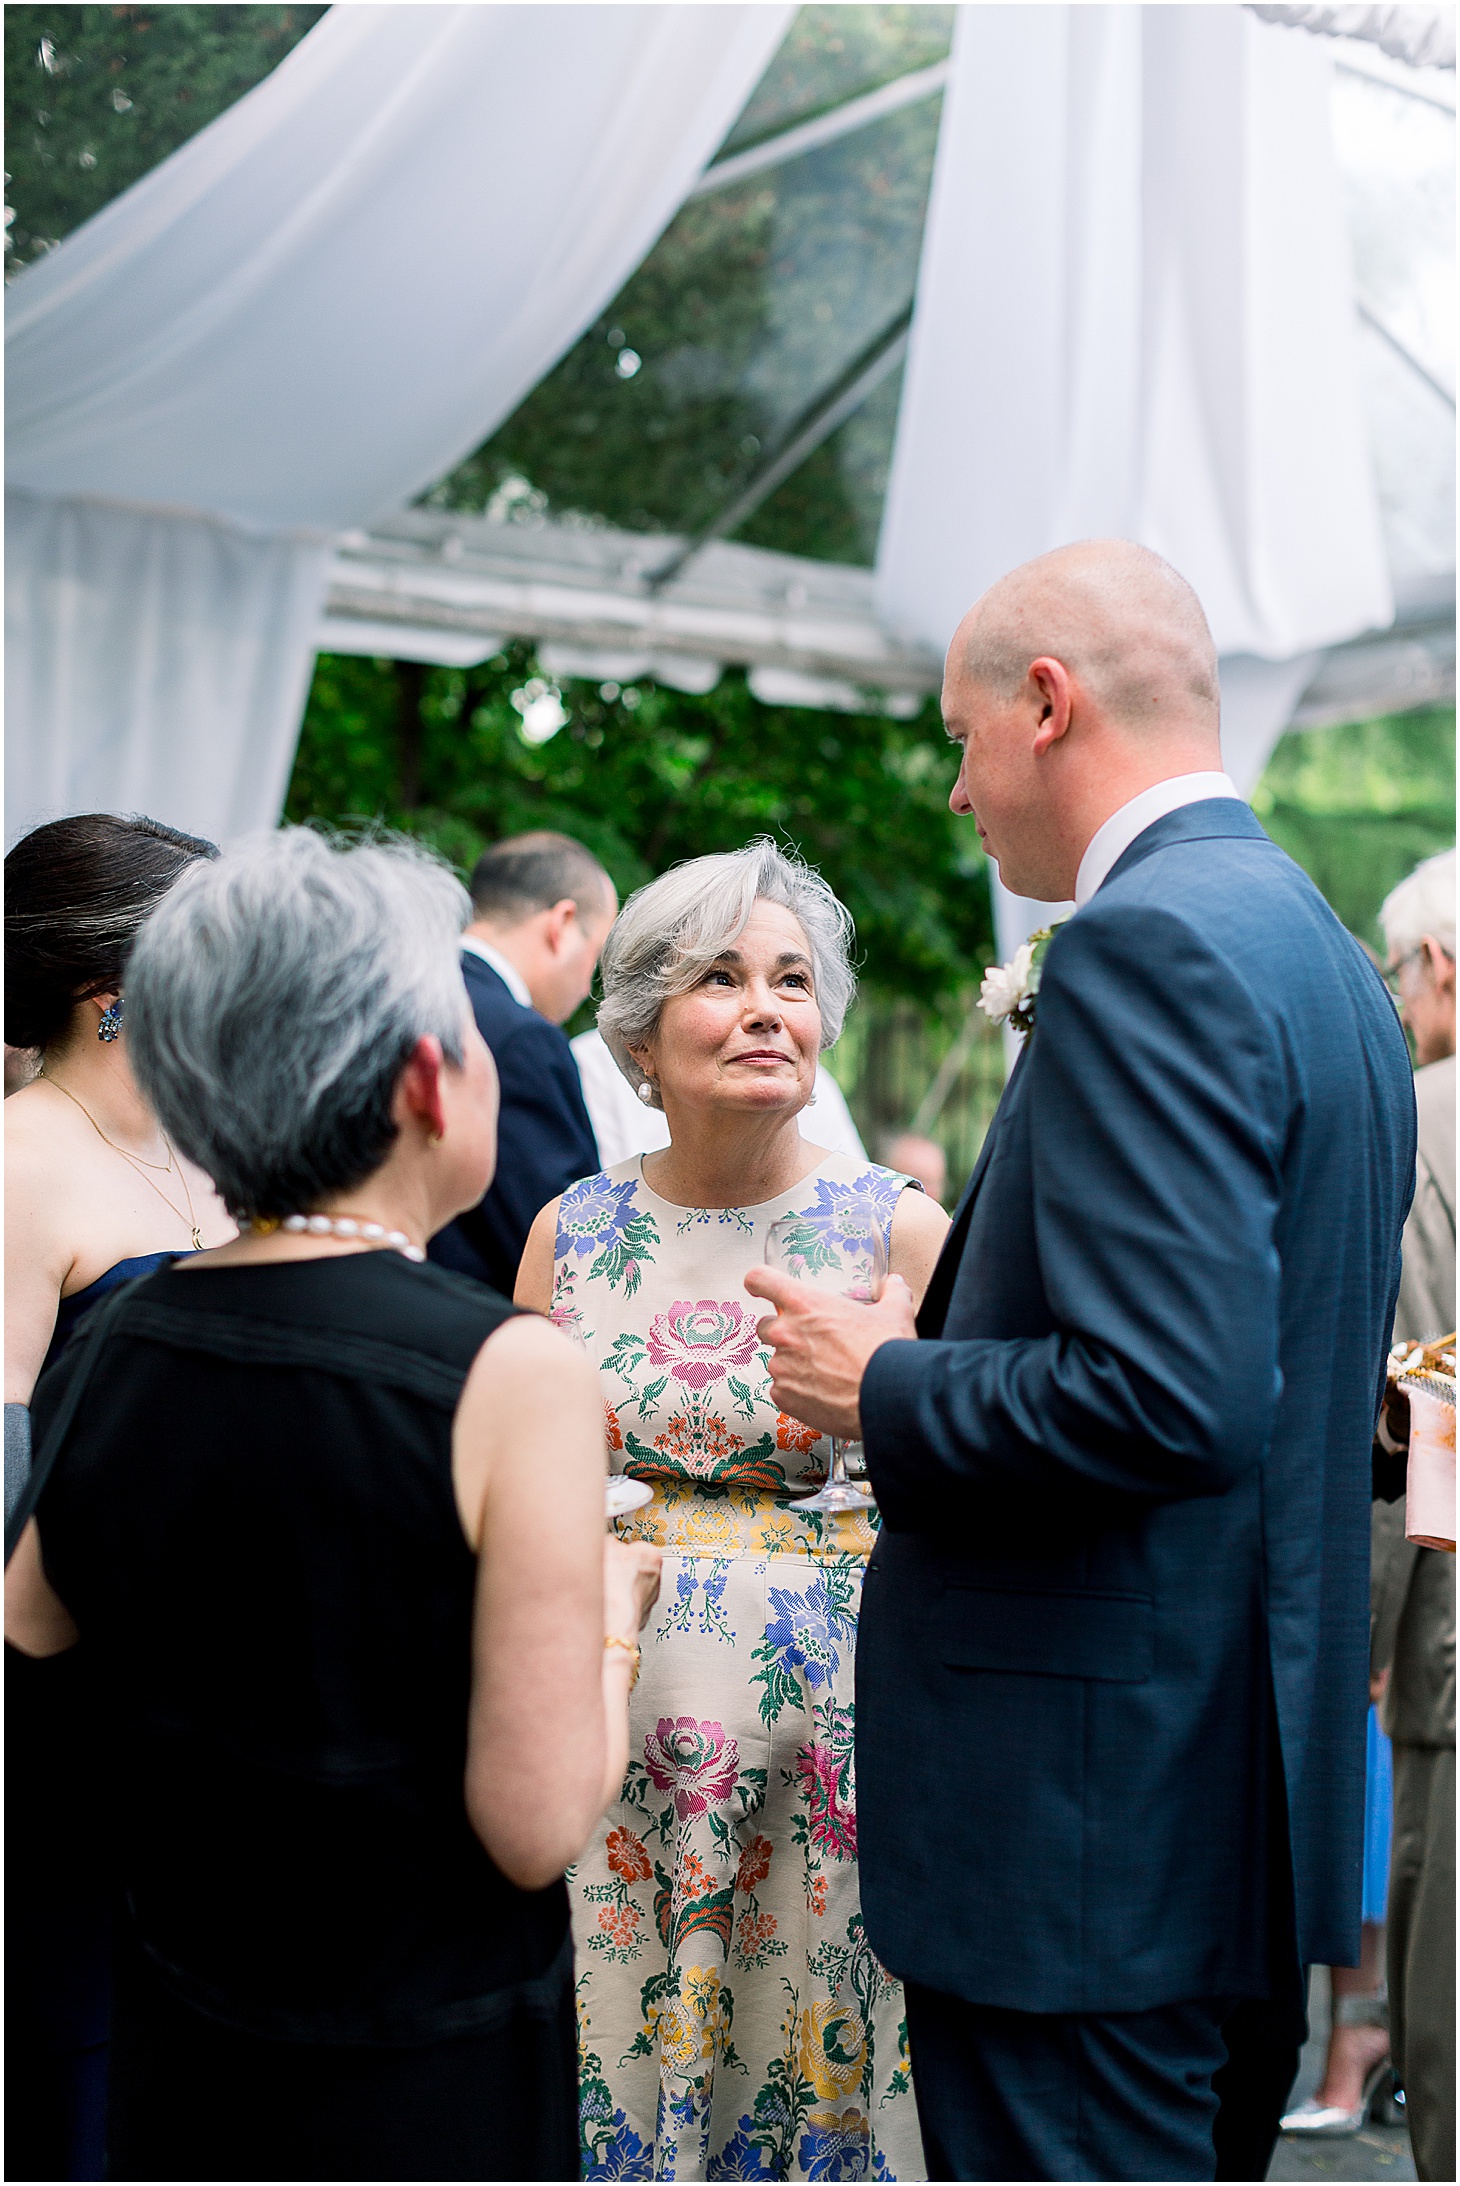 Wedding Reception at Dumbarton House Gardens, Sarah Bradshaw Photography